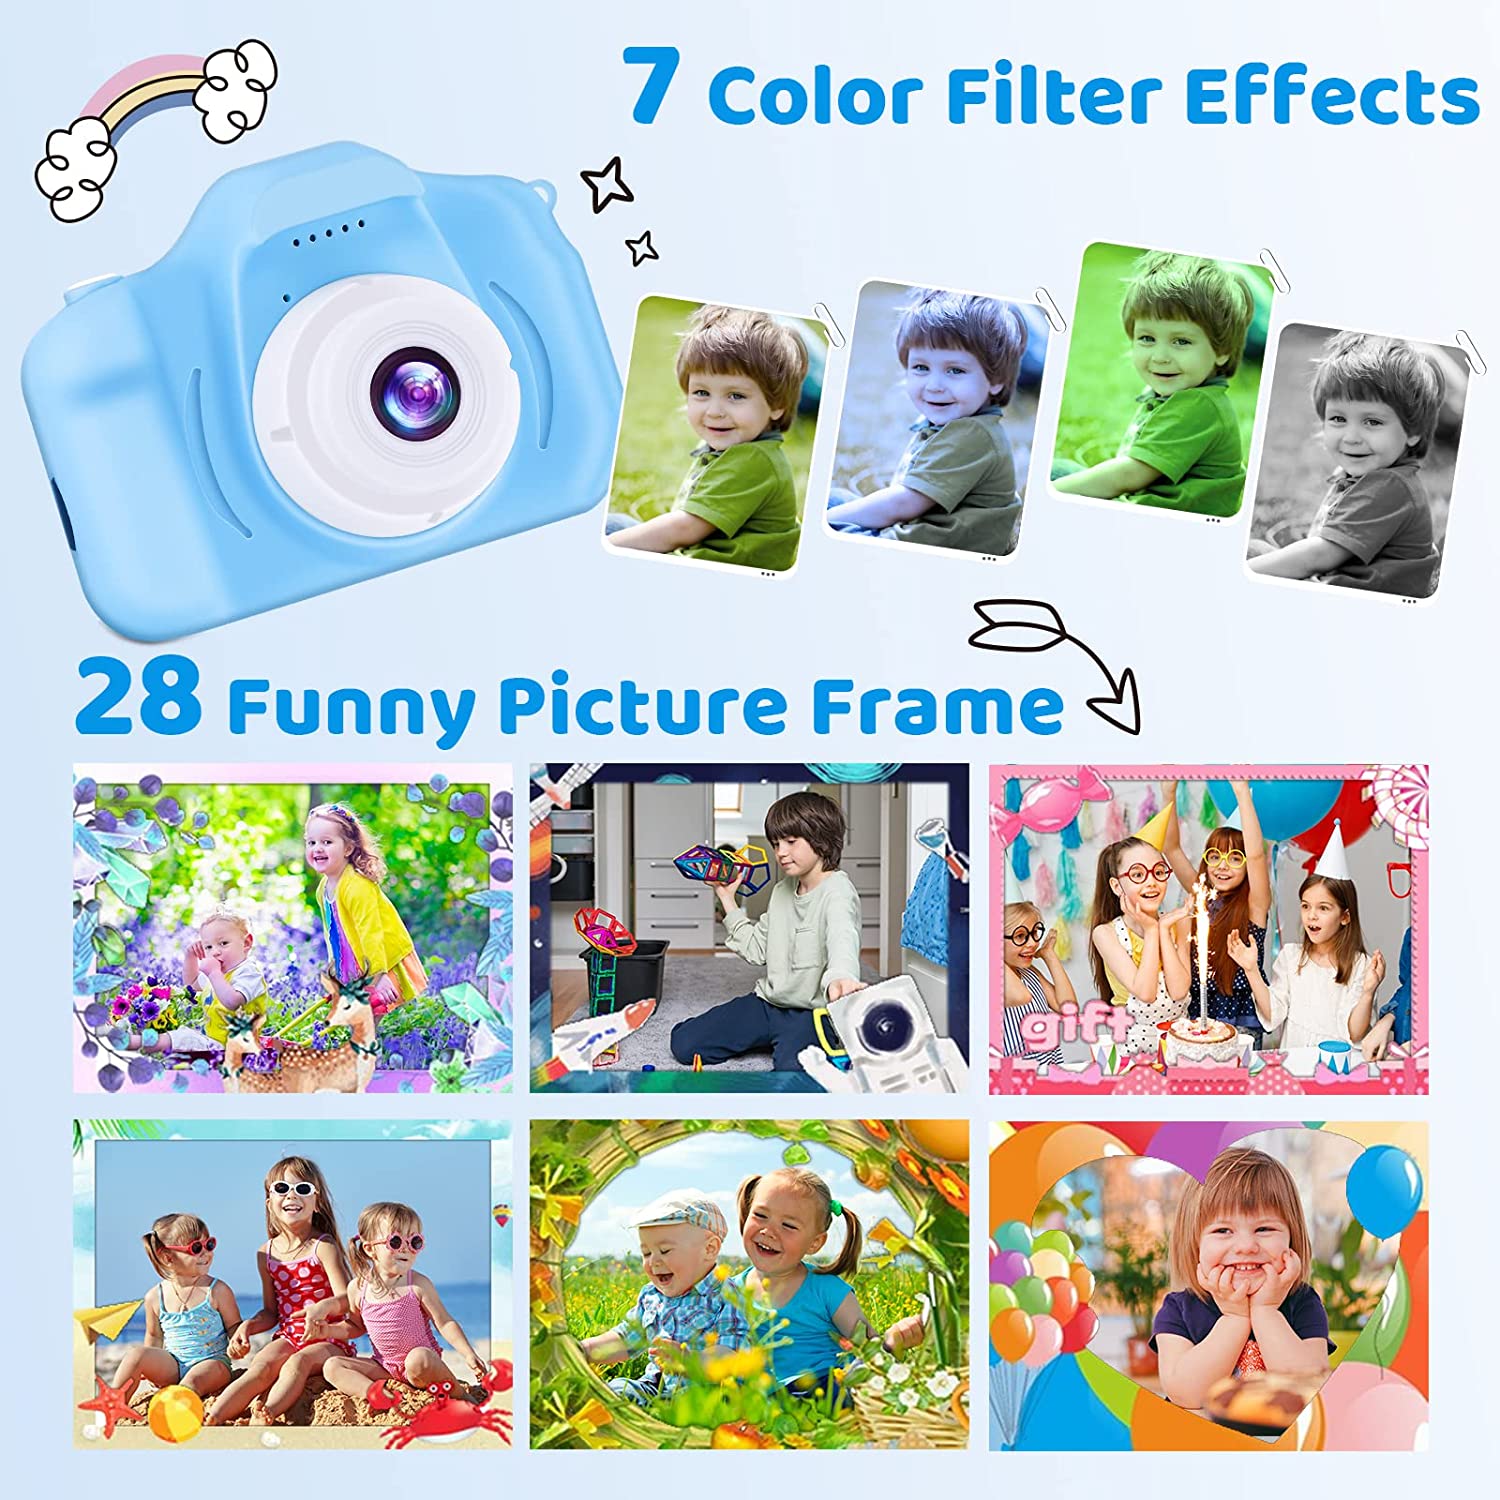 Digital-SLR-Cameras-DSLR-Kids-Digital-Camera-1080P-HD-Kid-Digital-Video-Mini-Camera-with-32GB-SD-Card-for-3-7-Years-Girls-Boys-Blue-8